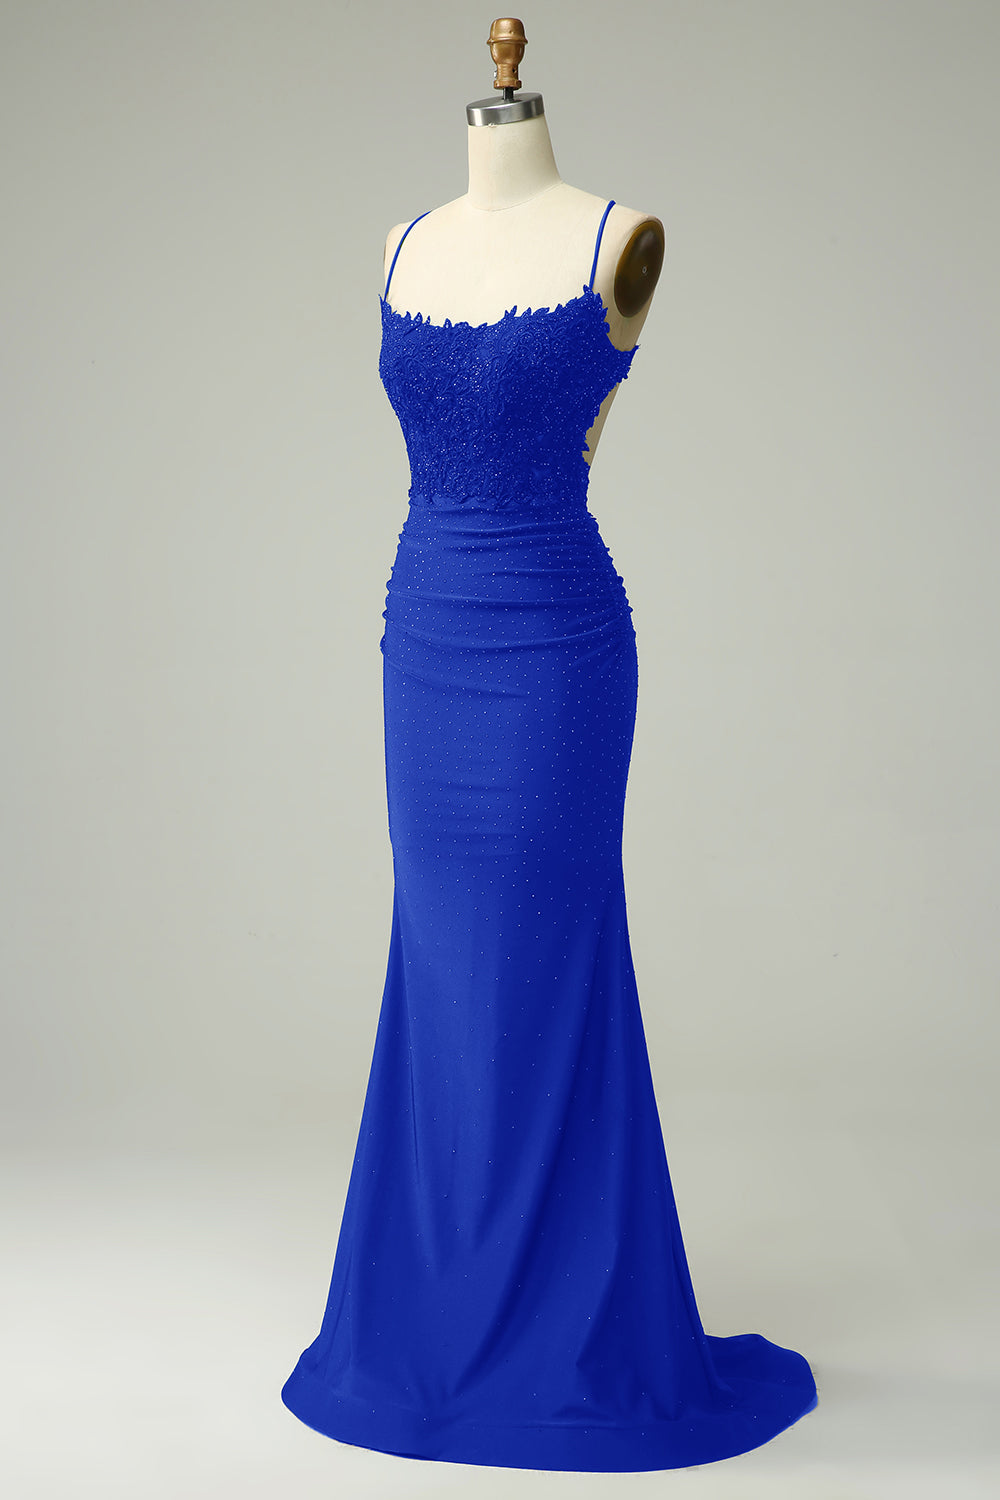 ZAPAKA Women Royal Blue Prom Dress Mermaid Spaghetti Straps Long